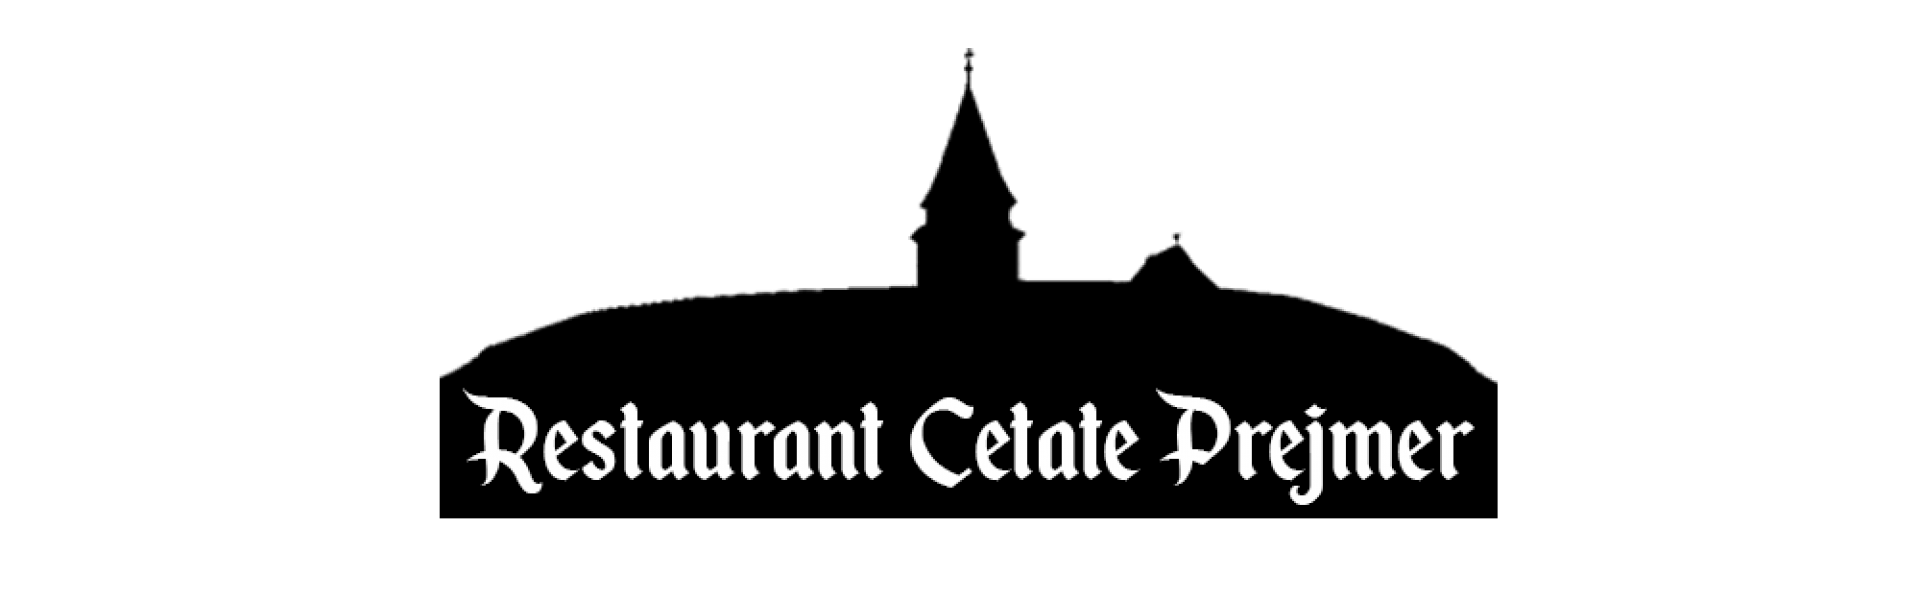 Restaurant Cetate Prejmer